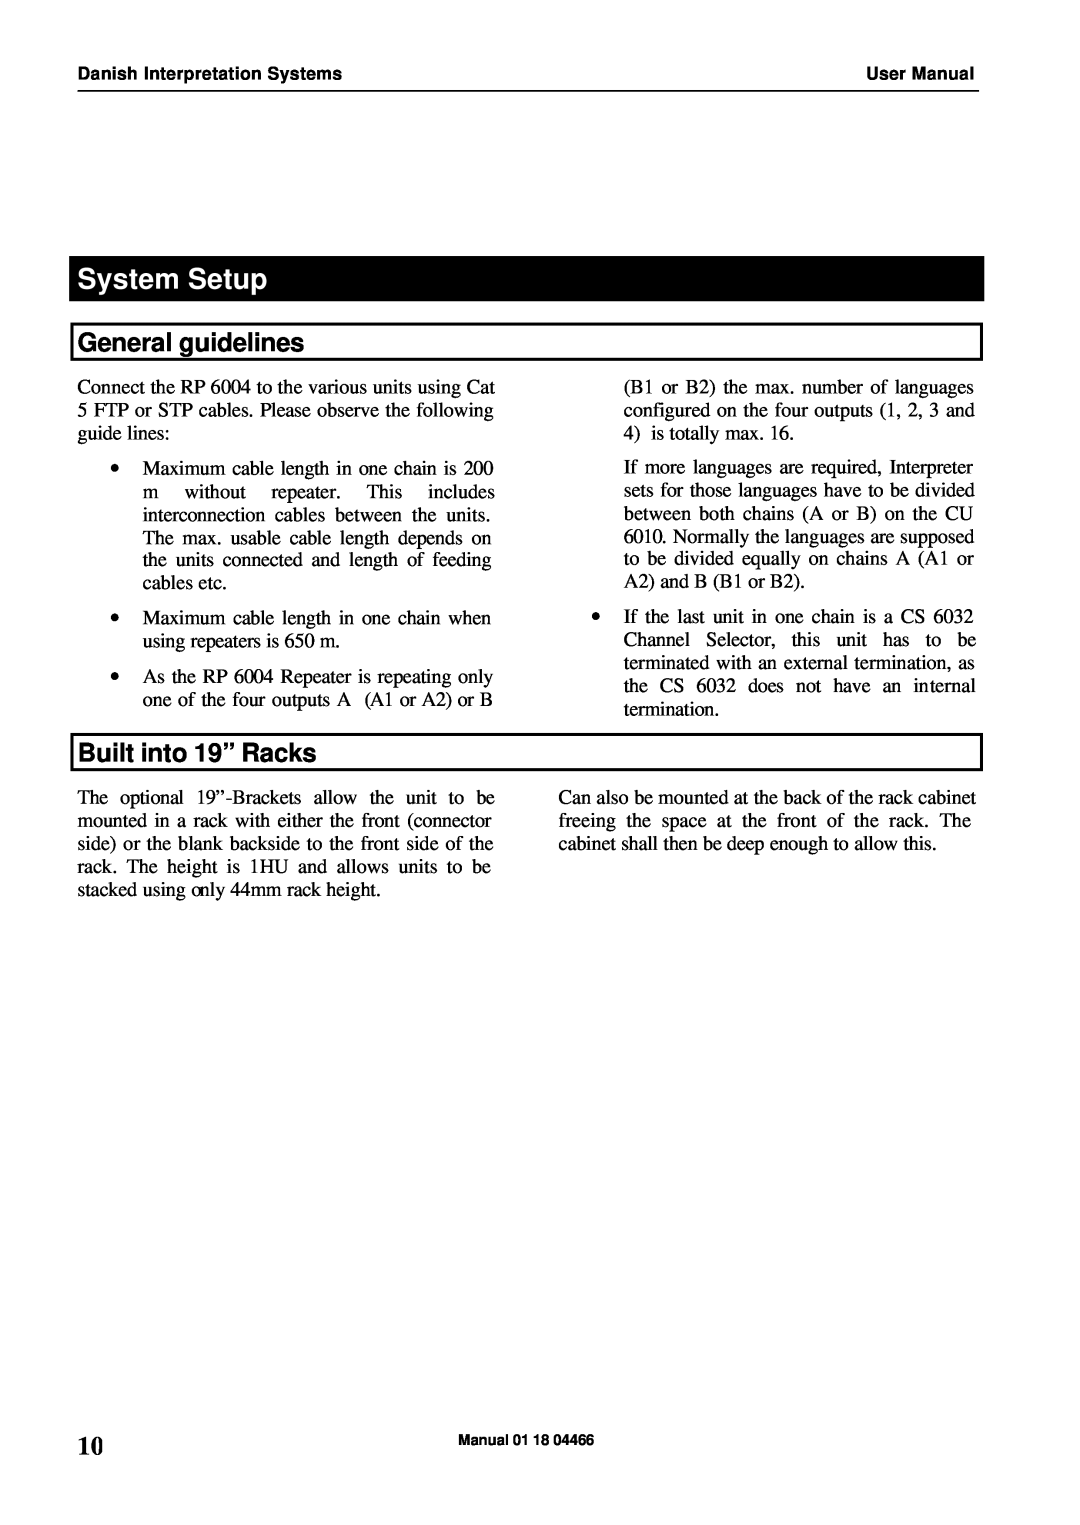 Listen Technologies RP 6004 user manual System Setup, General guidelines, Built into 19” Racks 